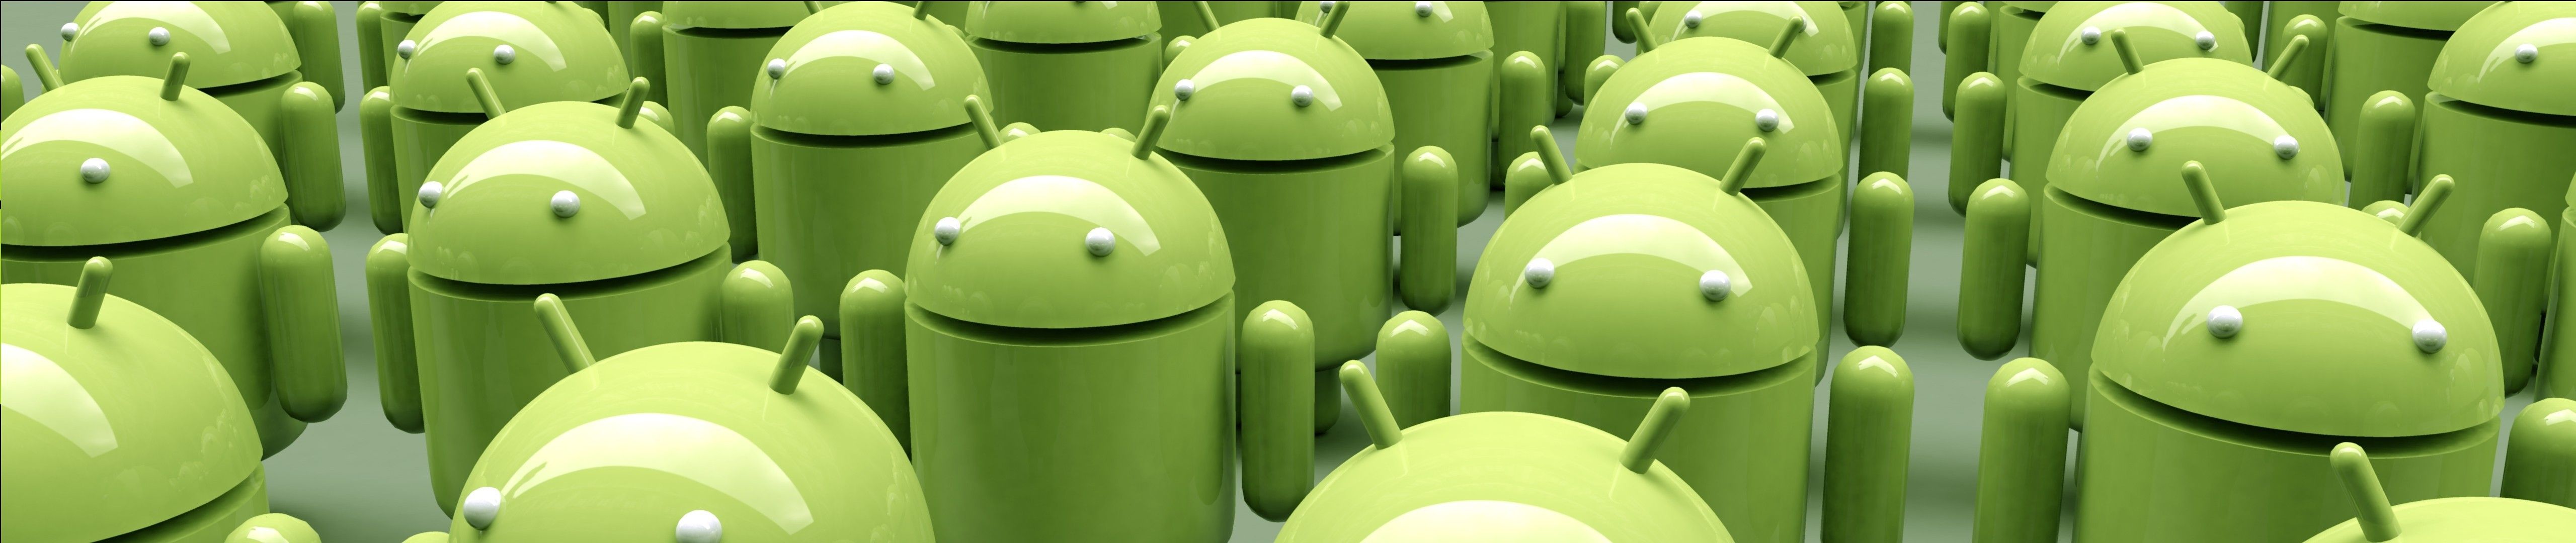 Download 5120x1080 Android google Wallpaperdesktopimages.org